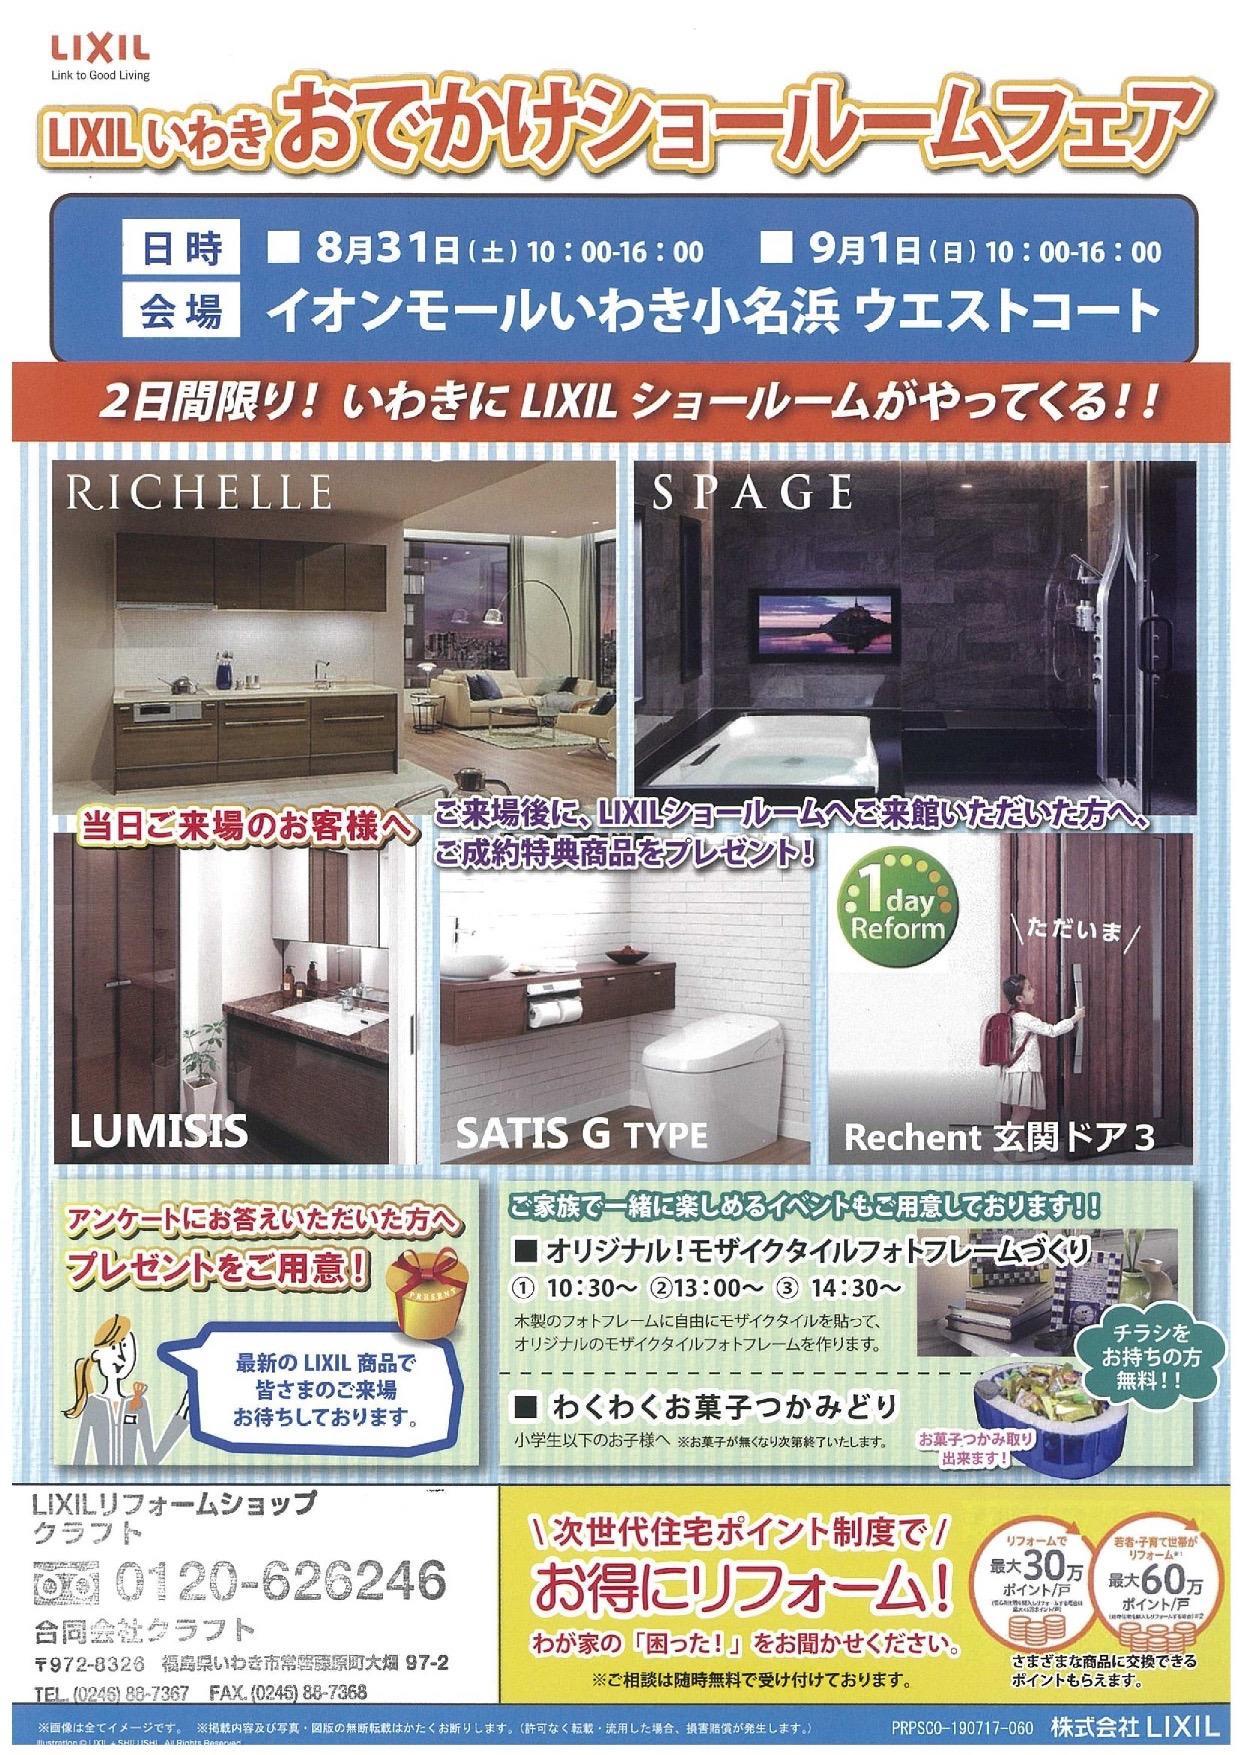 LIXILいわきおでかけショールームフェア (1).jpg